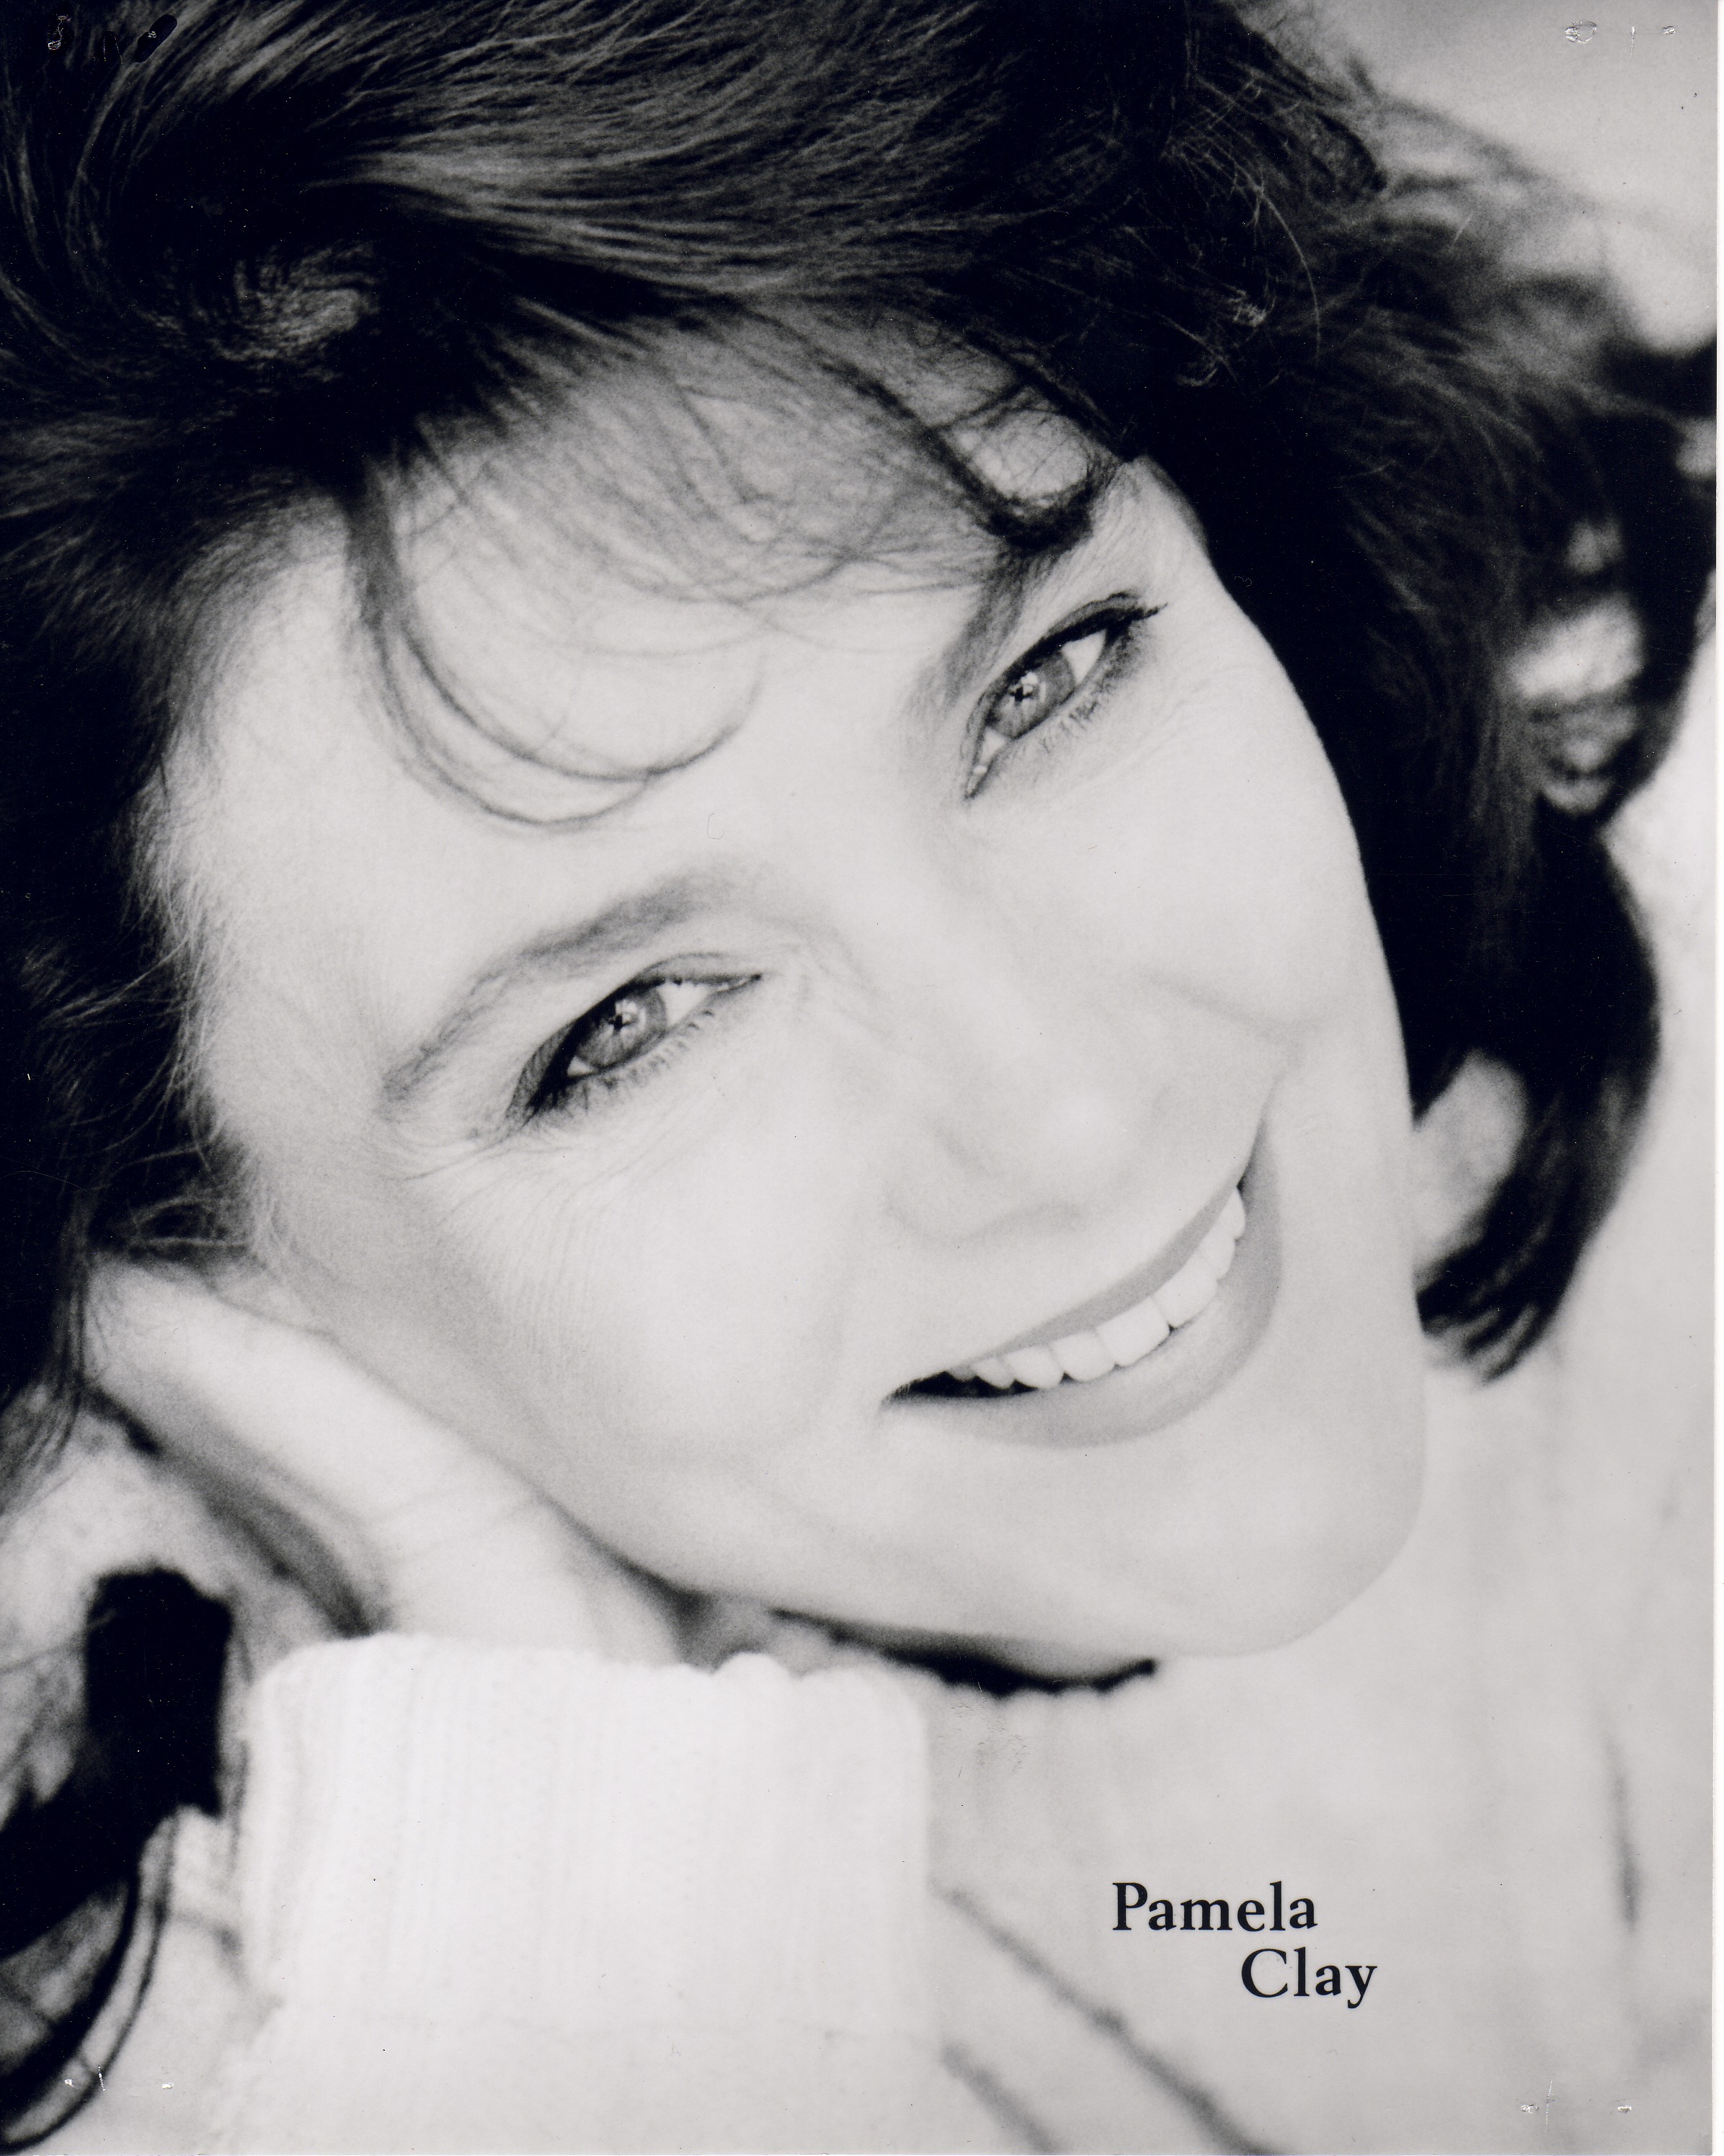 Pamela smiles in black and white!